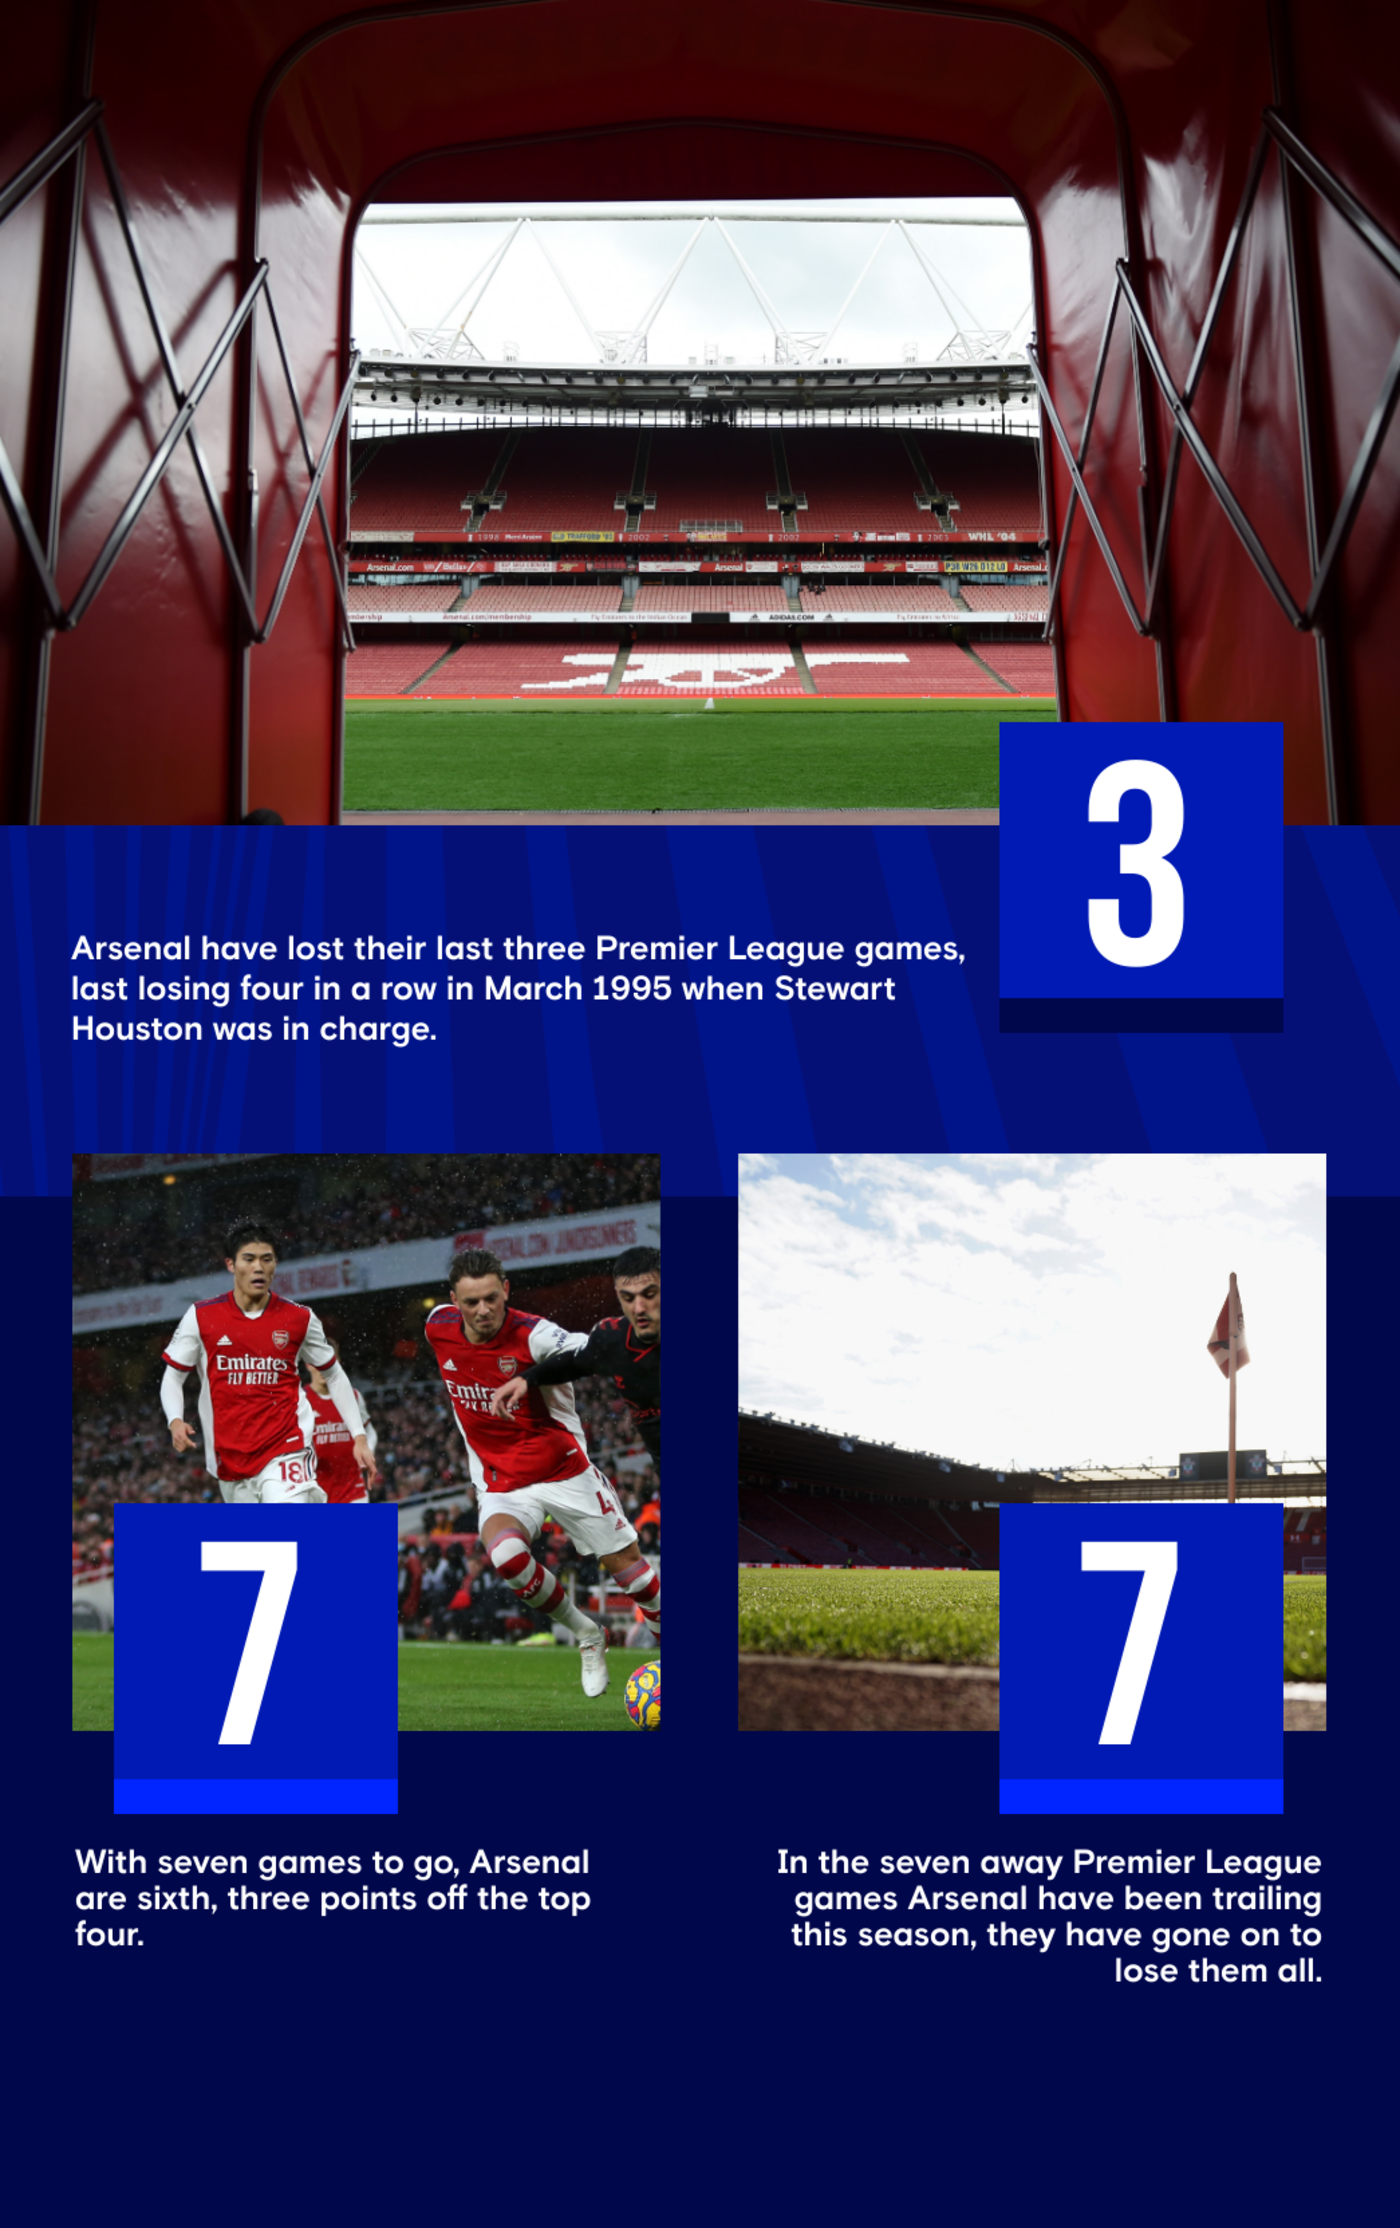 London FC (Chelsea) PES 2014 Stats